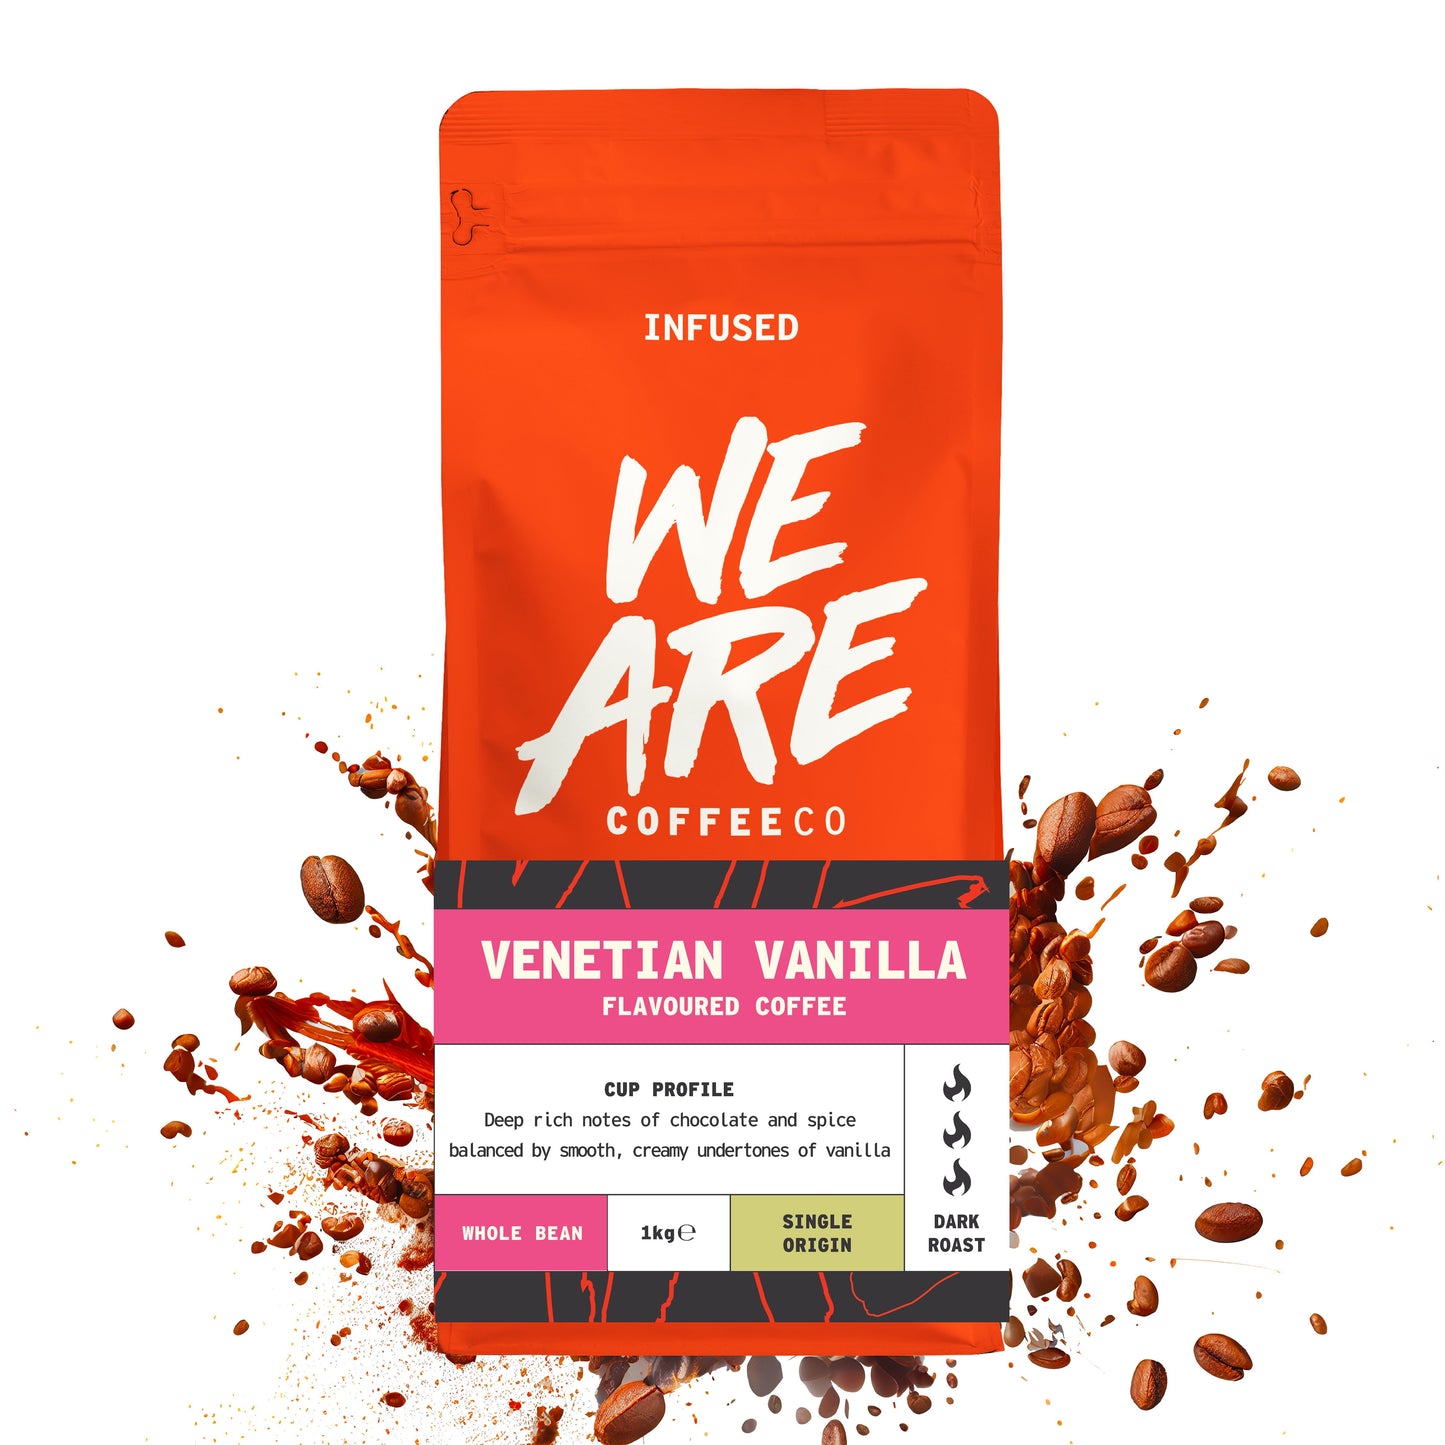 Venetian Vanilla Flavoured Coffee